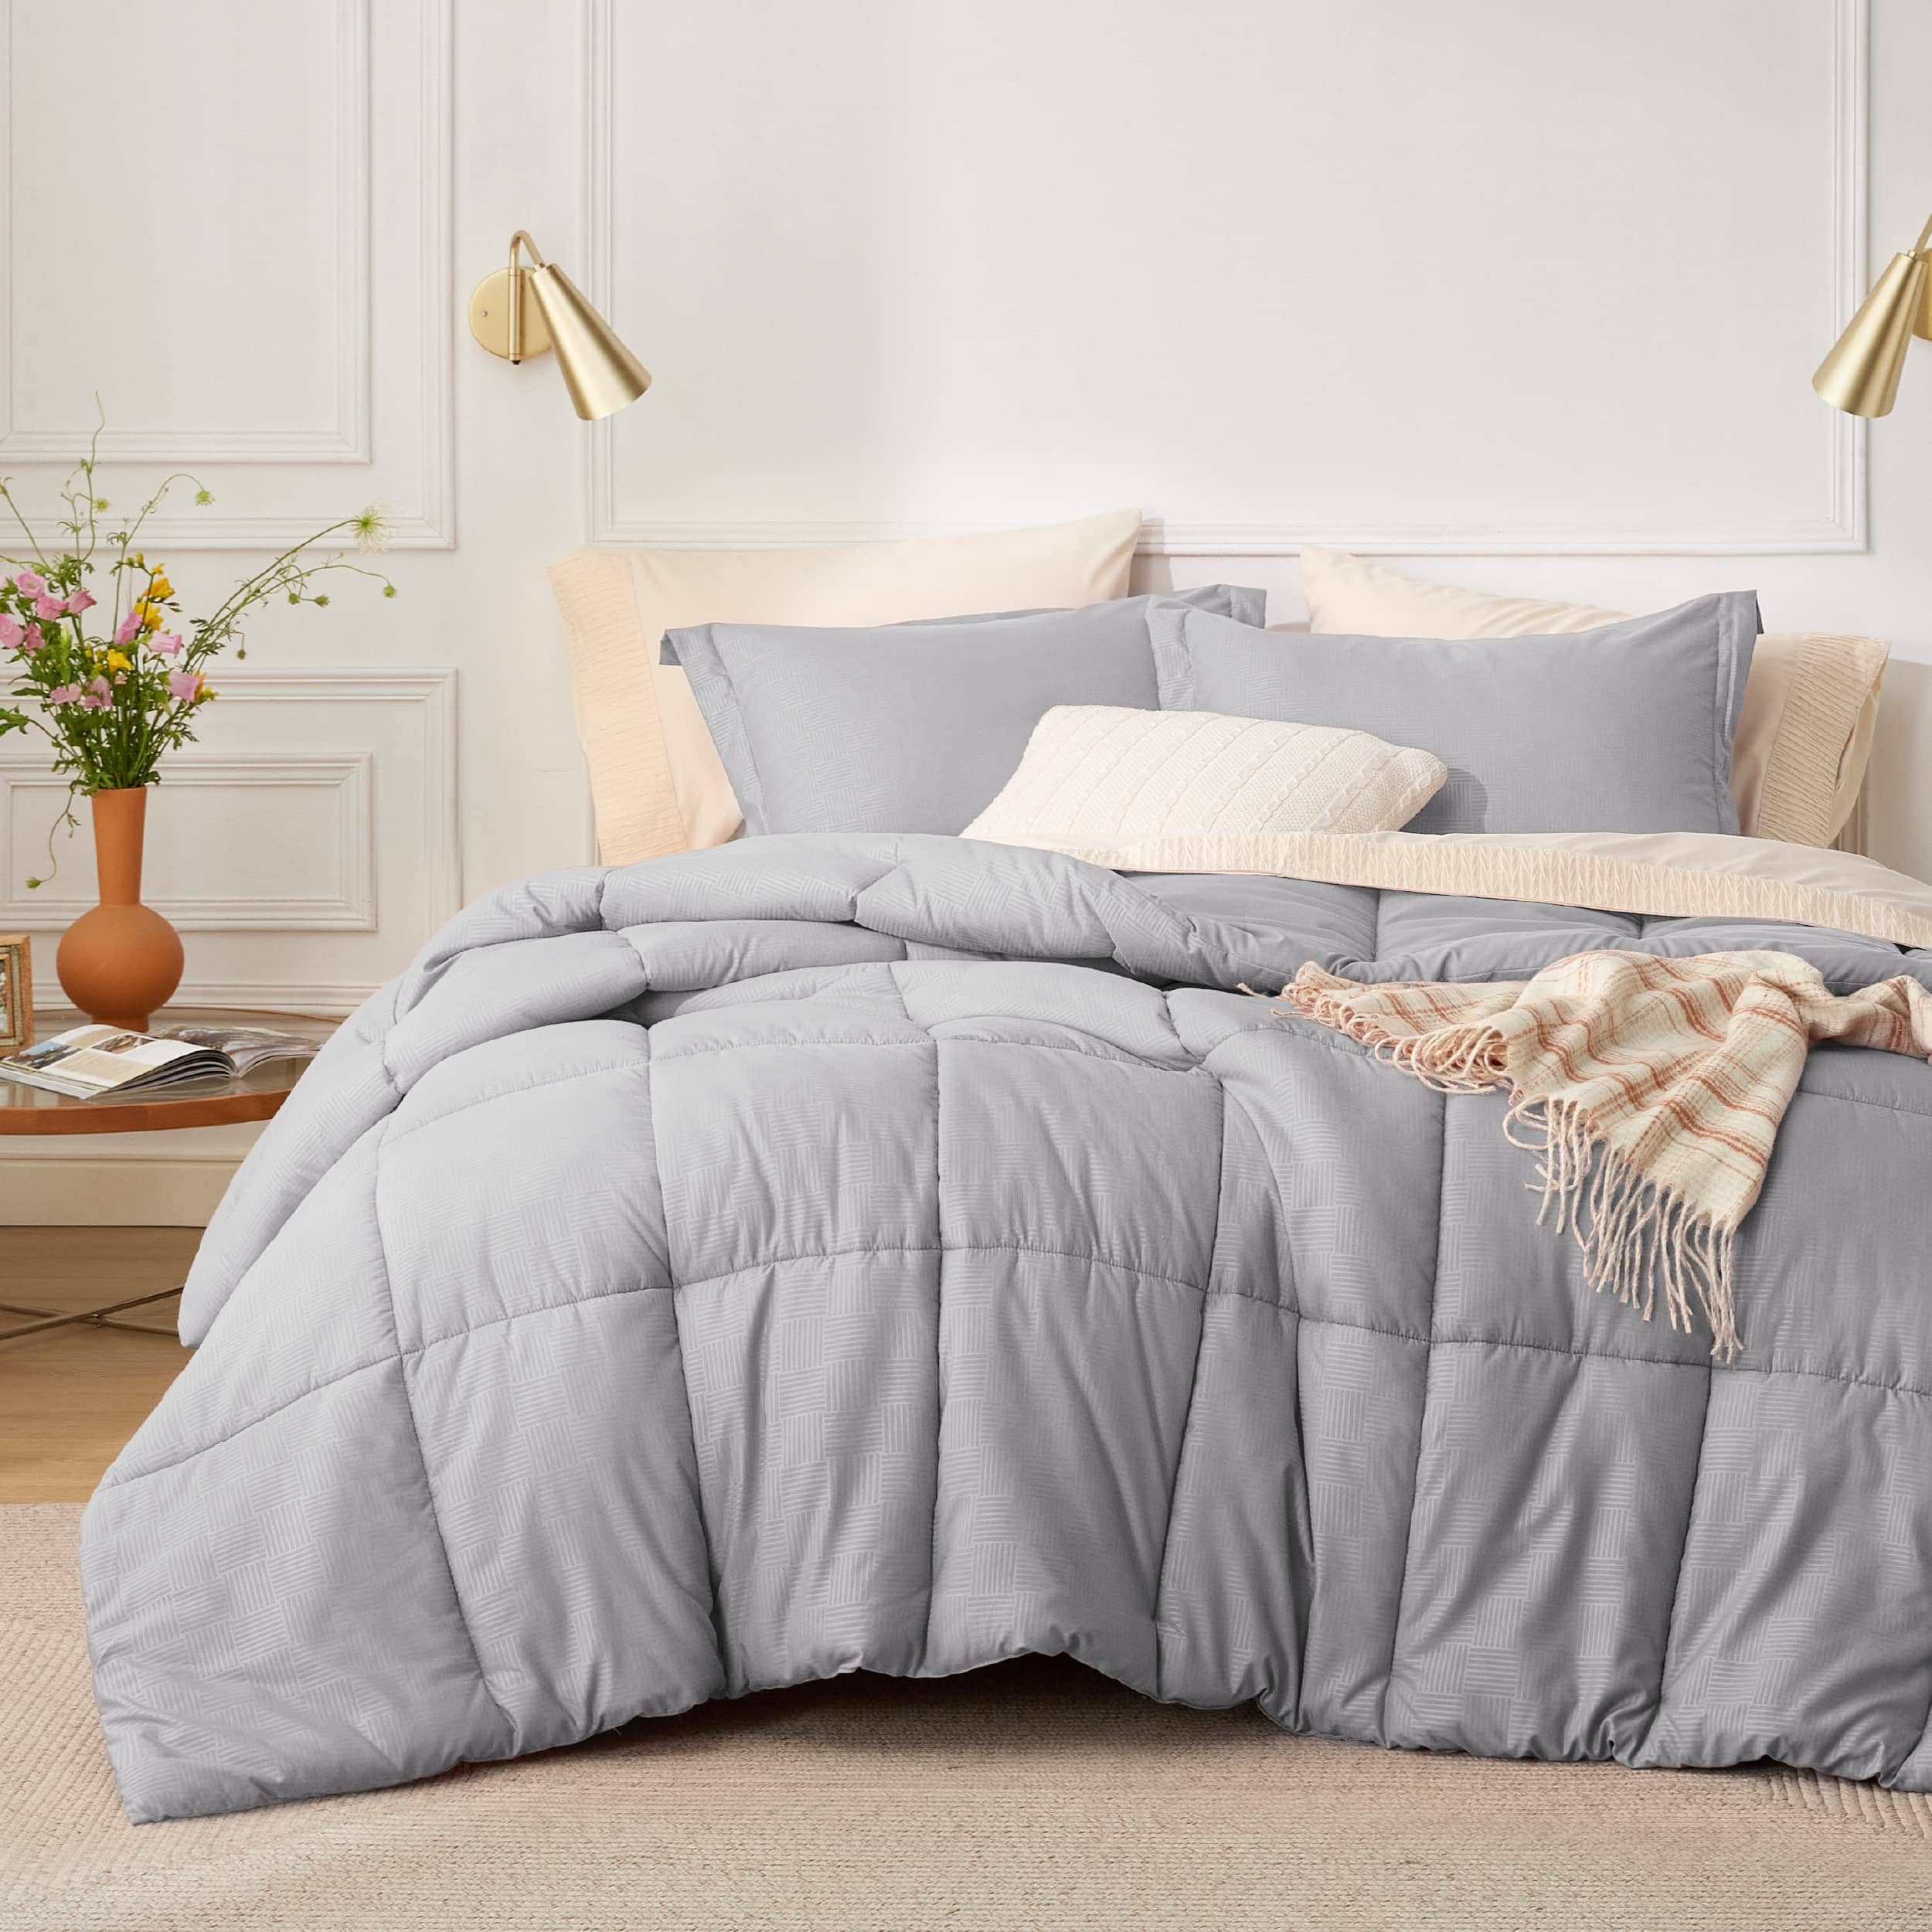  Bedsure King Comforter Set - Grey Comforter, Cute Floral  Bedding Comforter Sets, 3 Pieces, 1 Soft Reversible Botanical Flowers  Comforter and 2 Pillow Shams : Home & Kitchen